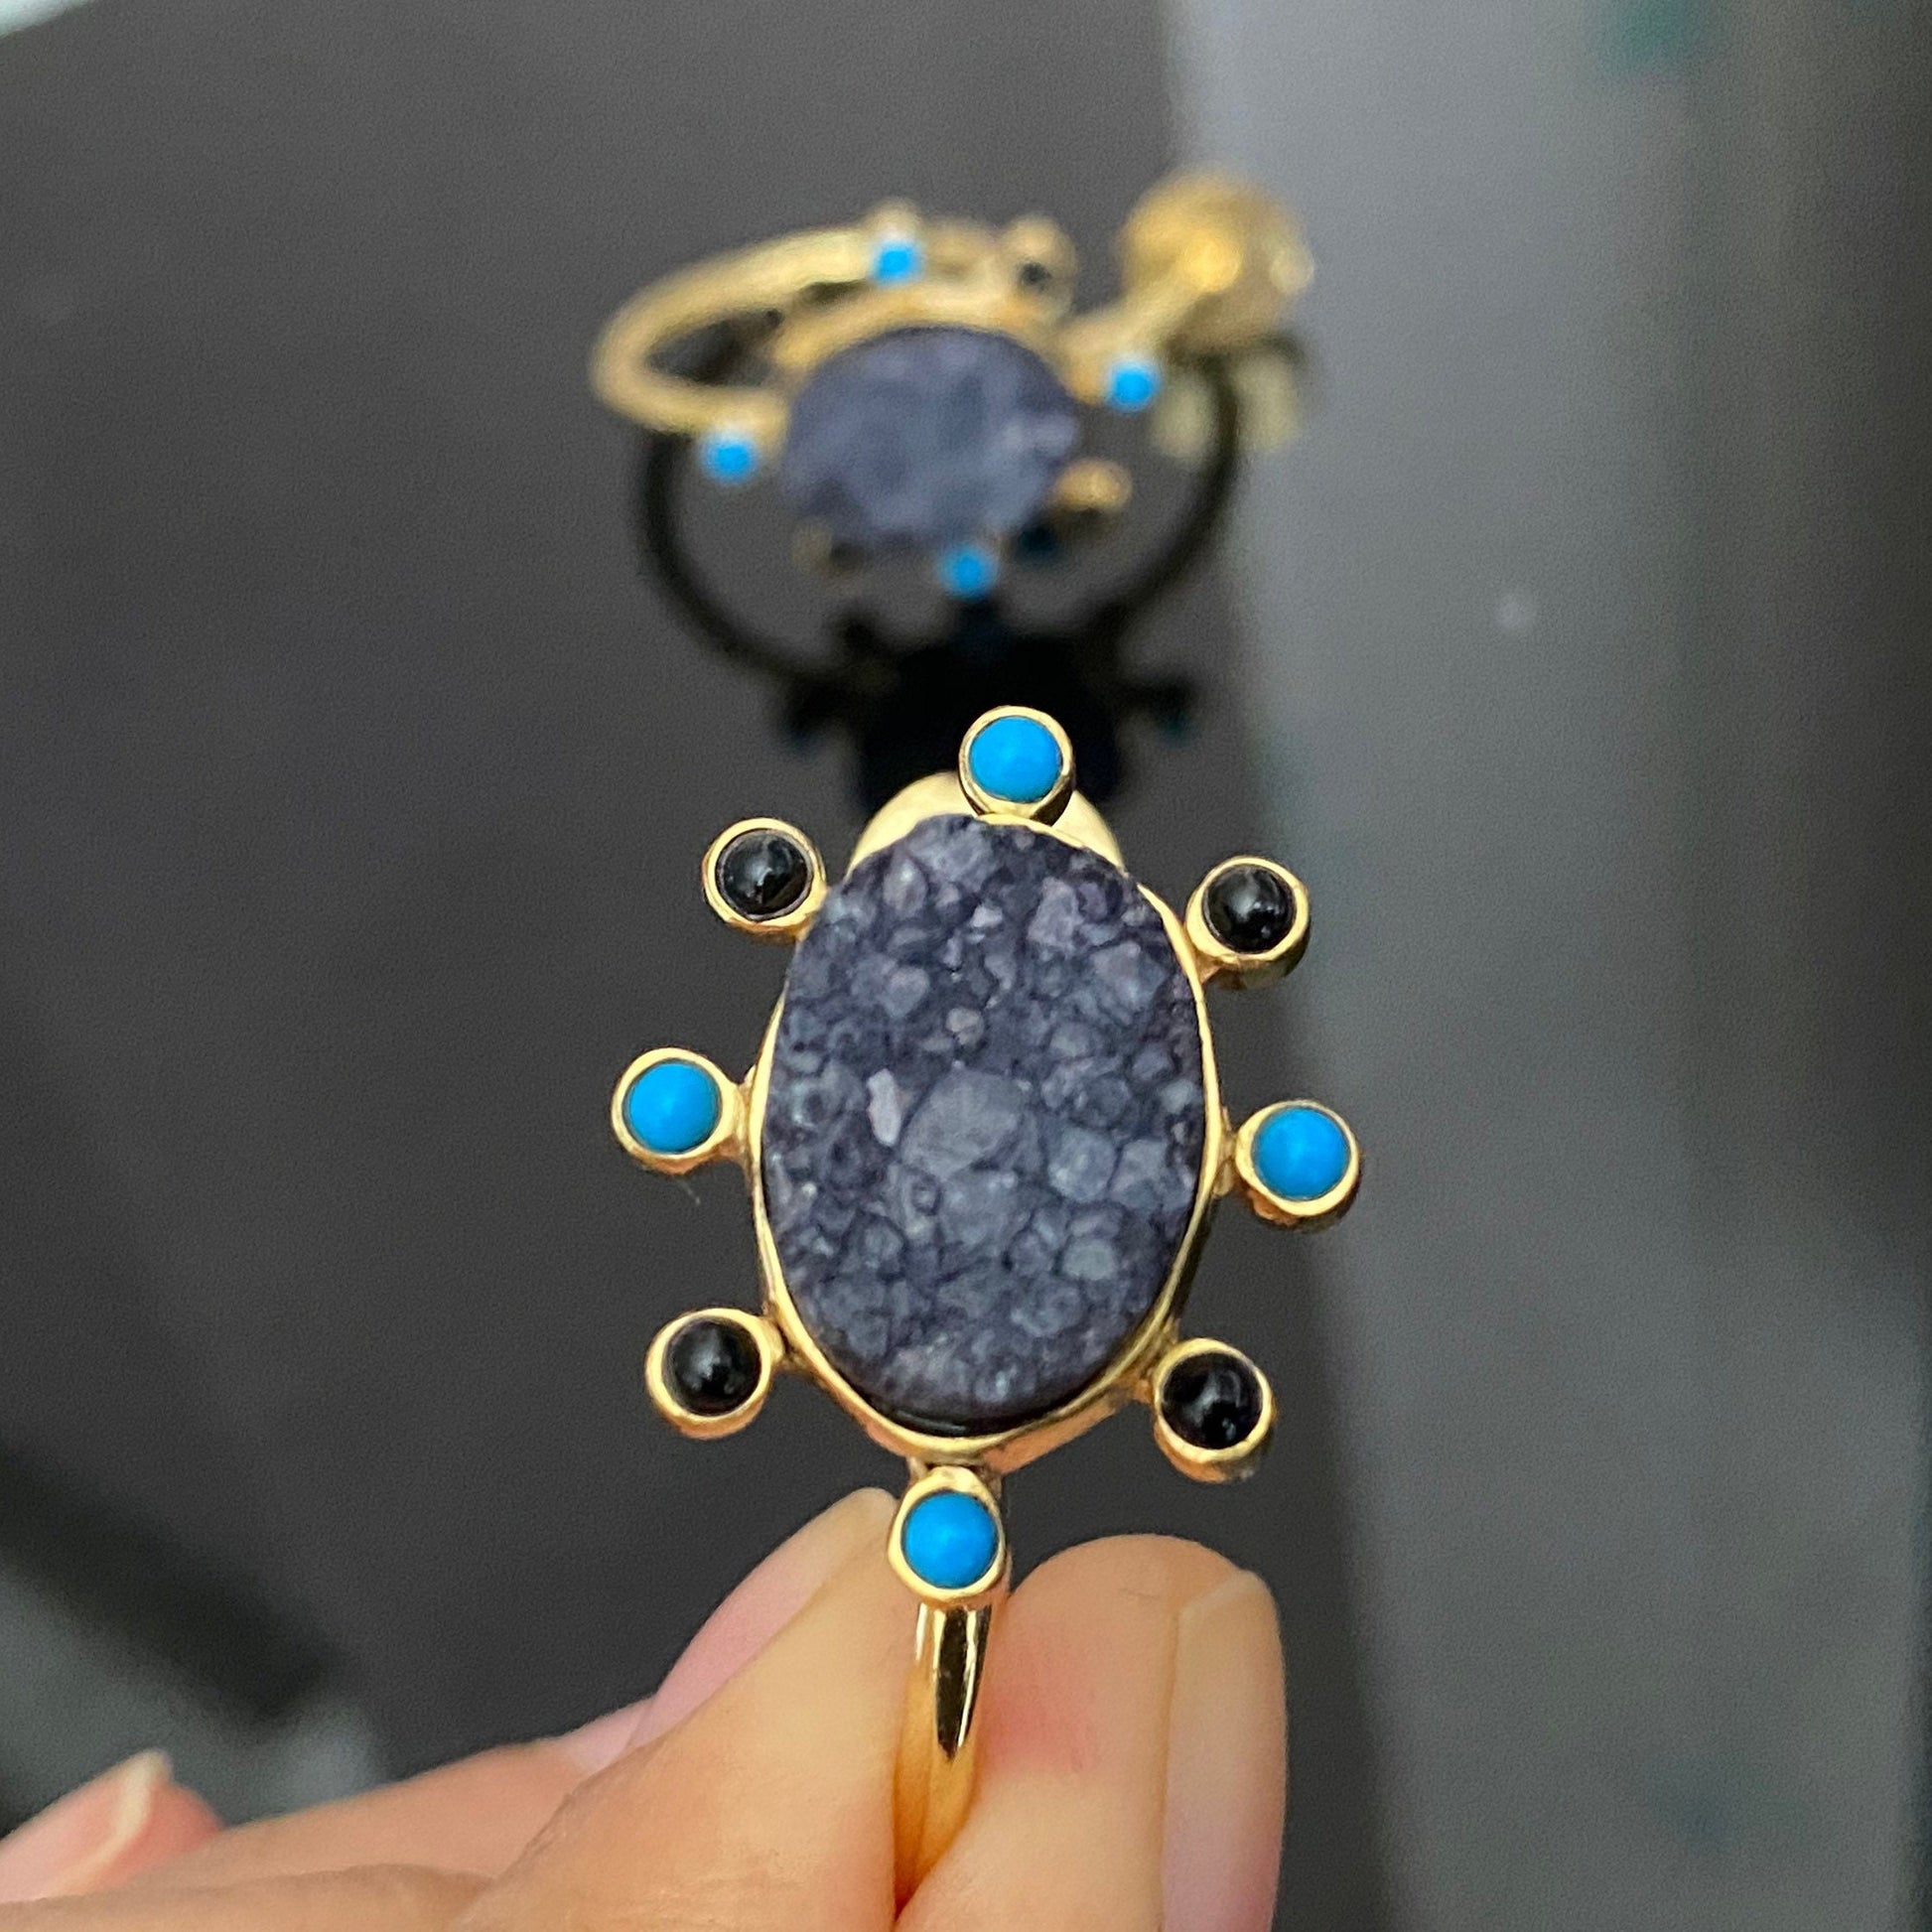 Black Onyx, Agate, Turquoise Gold Earrings, Druzy Earrings, Unique Gemstone Earrings, Birthday Gifts For Women